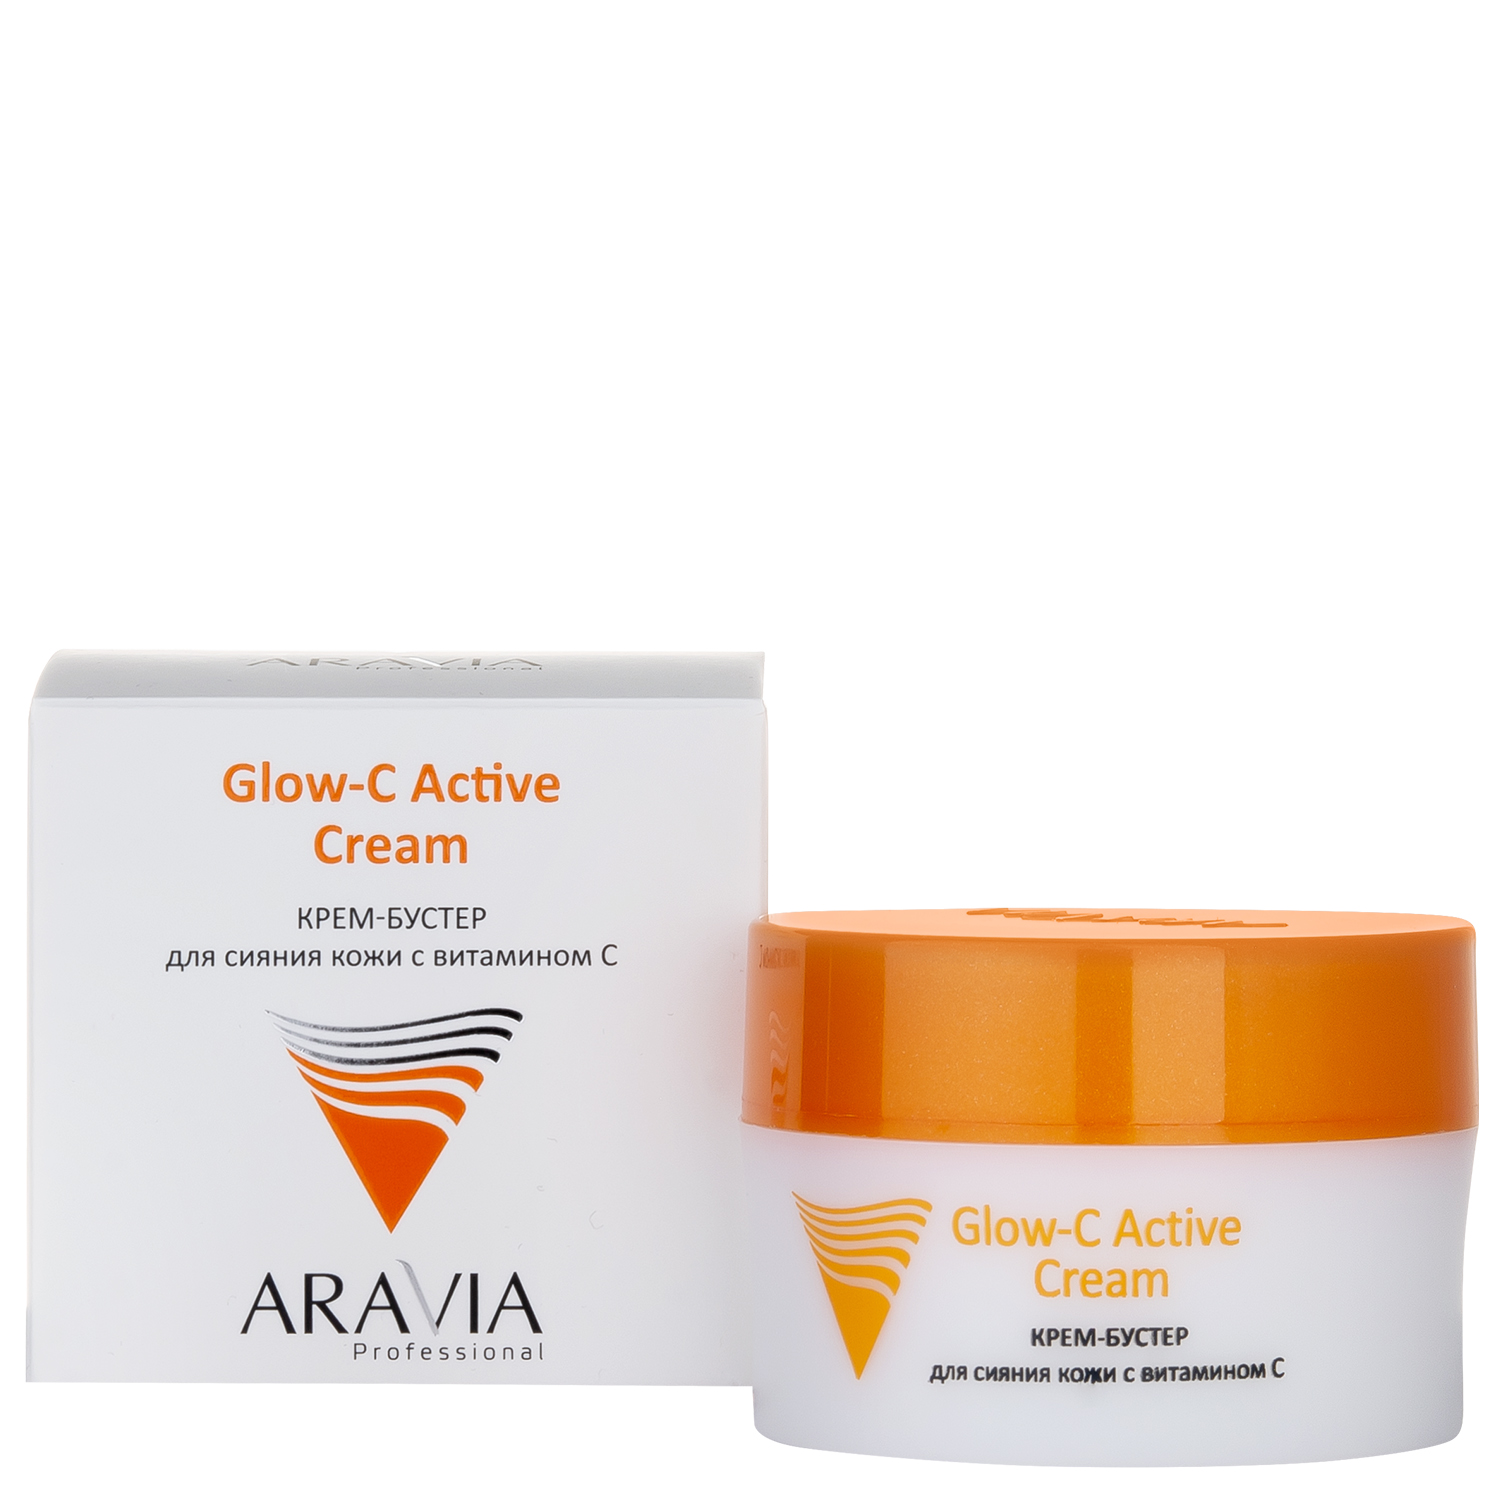 Крем-бустер для сияния кожи с витамином С Glow-C Active Cream, 50 мл, ARAVIA Professional